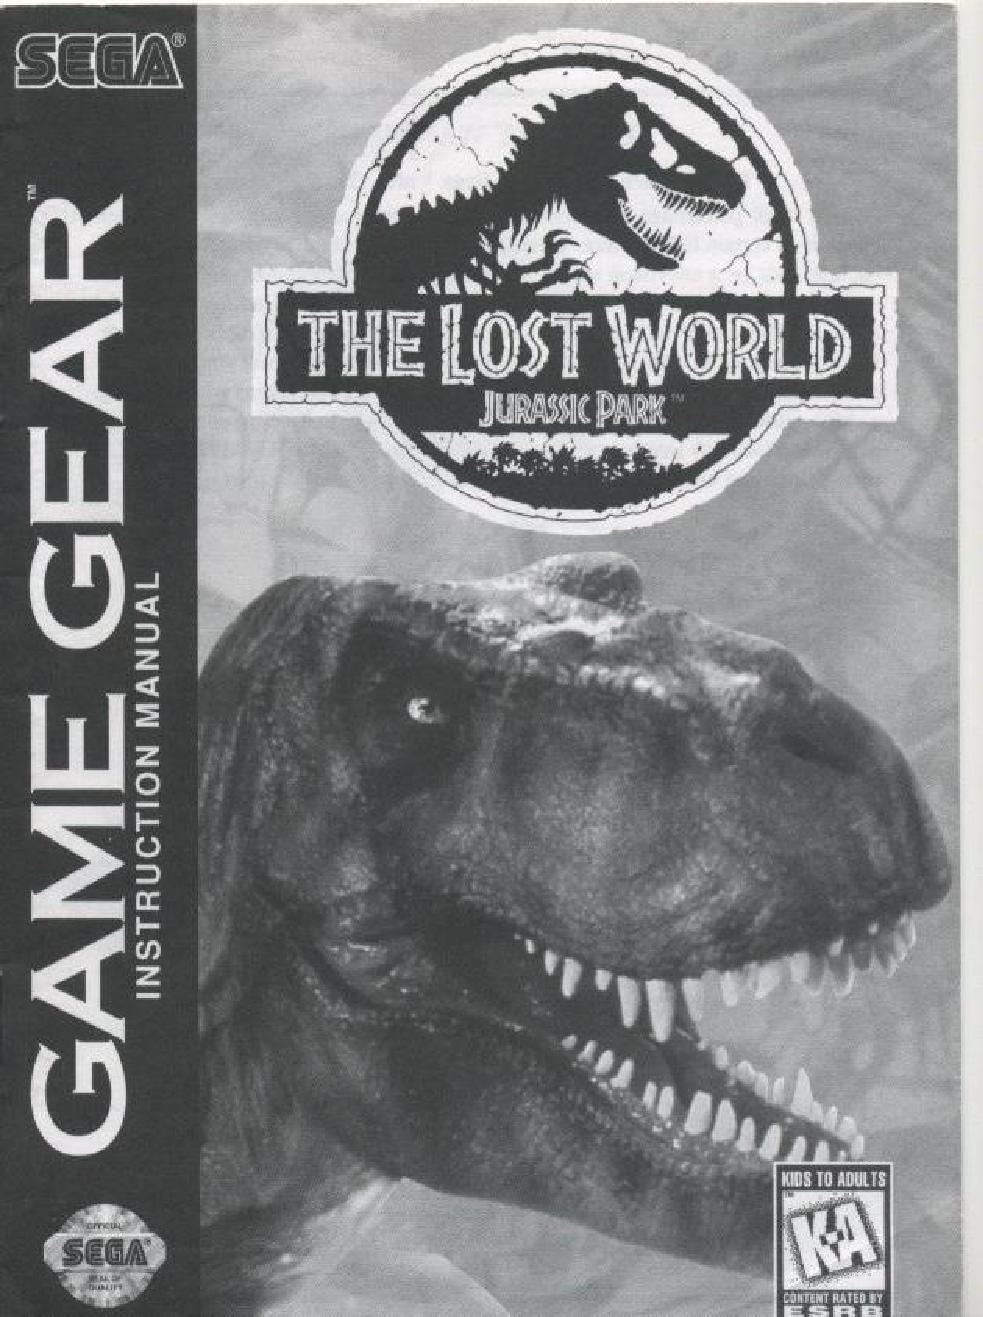 The Lost World Jurassic Park GG US Manual.pdf